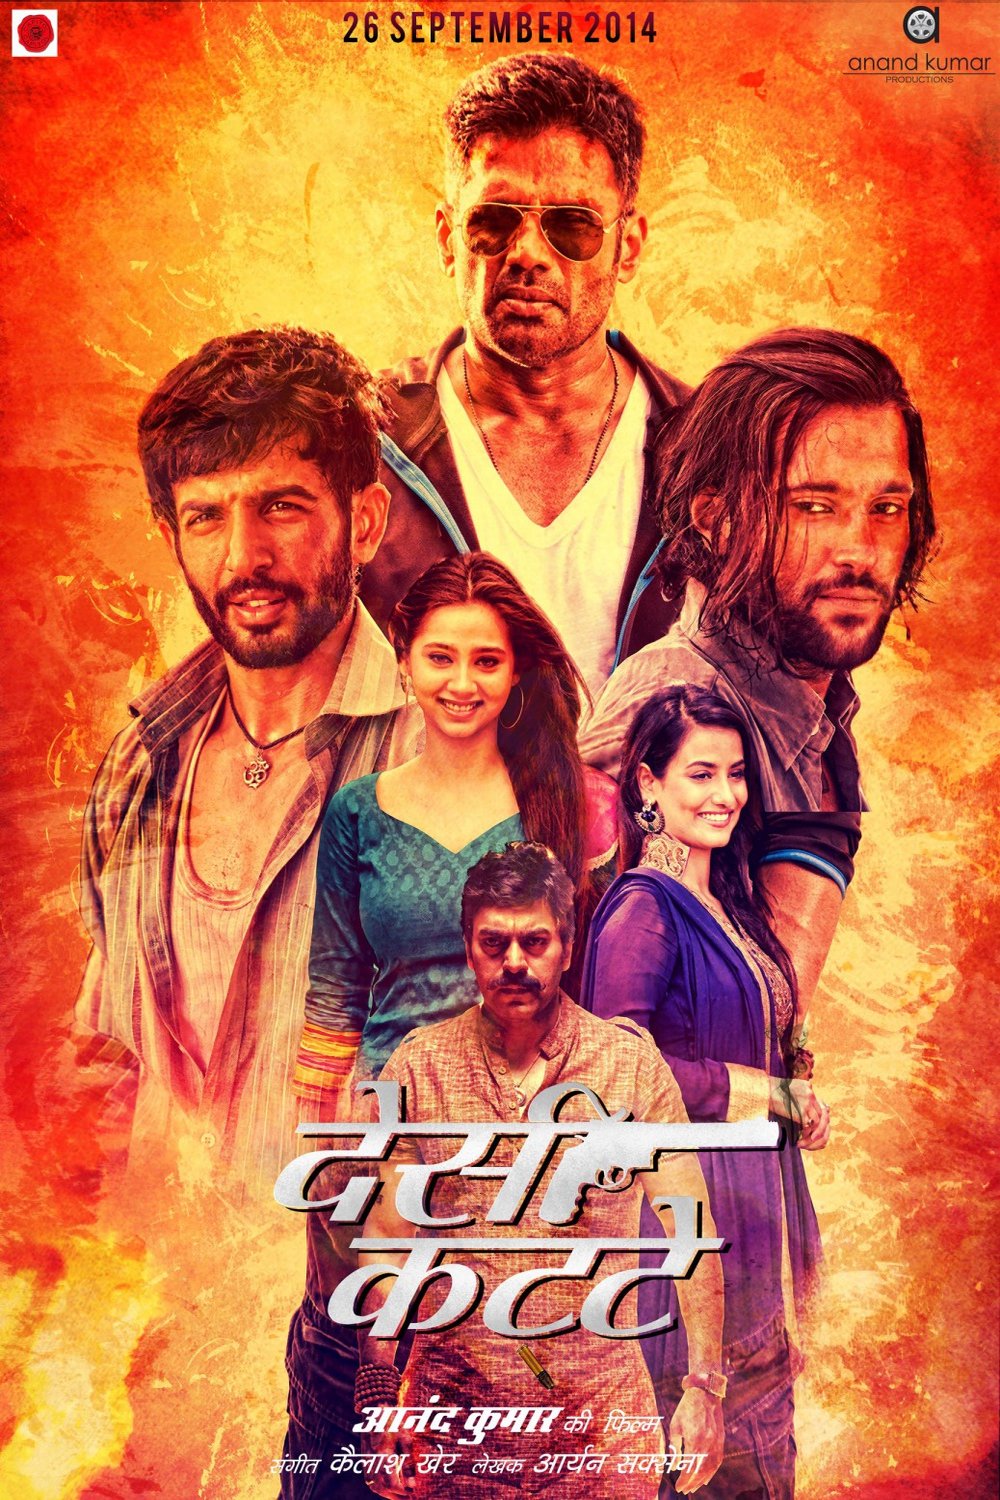 Hindi poster of the movie Desi Kattey